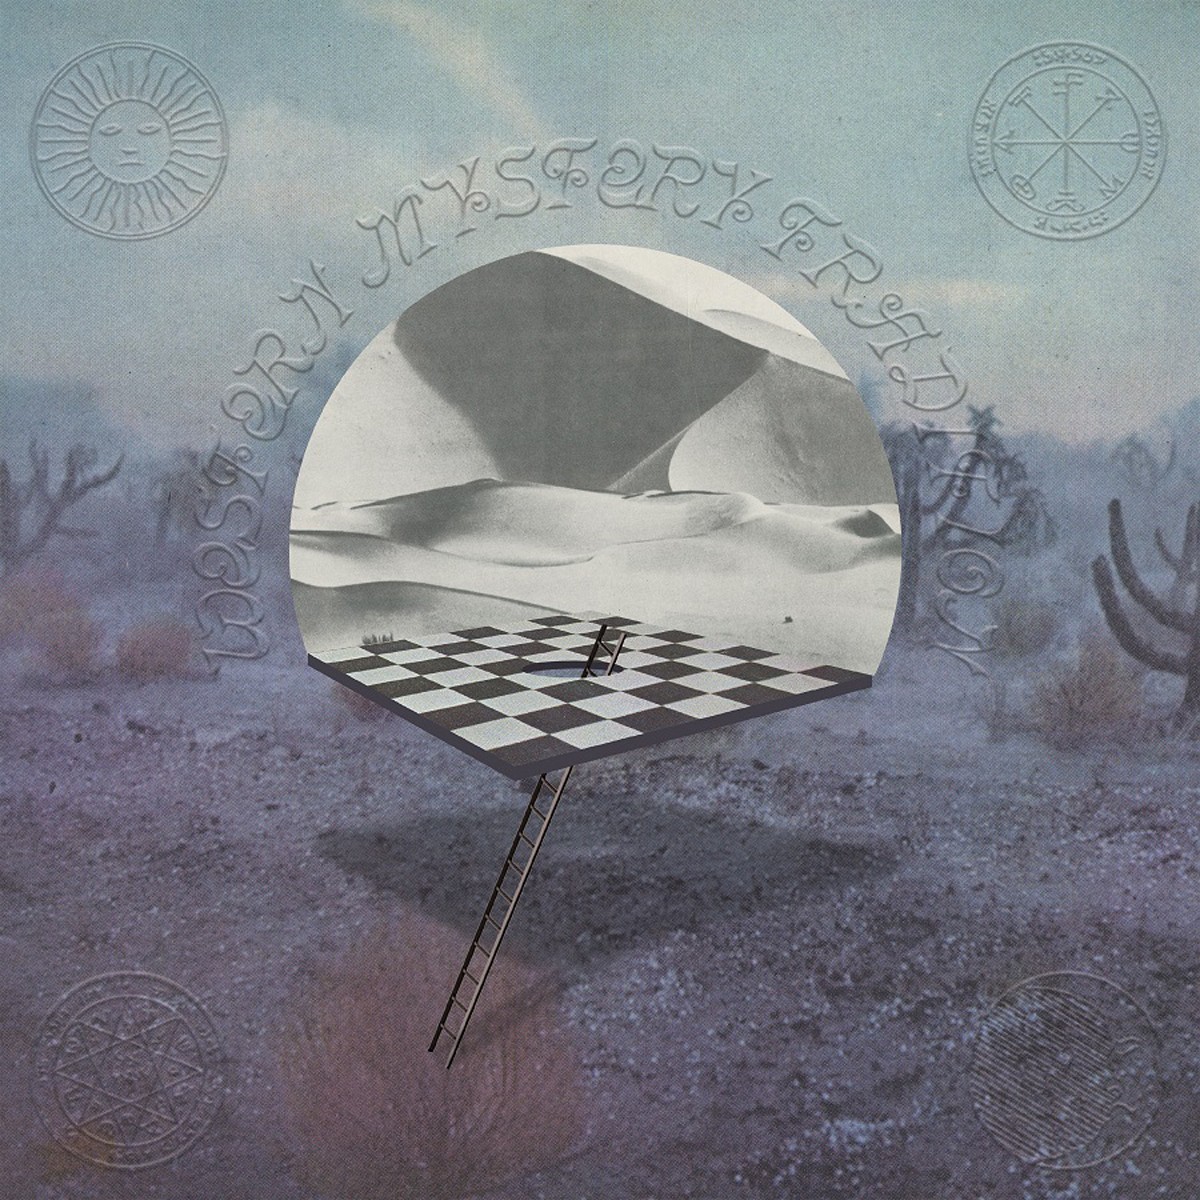 Moonwalks - Western Mystery Tradition (Ultra Clear Vinyl)